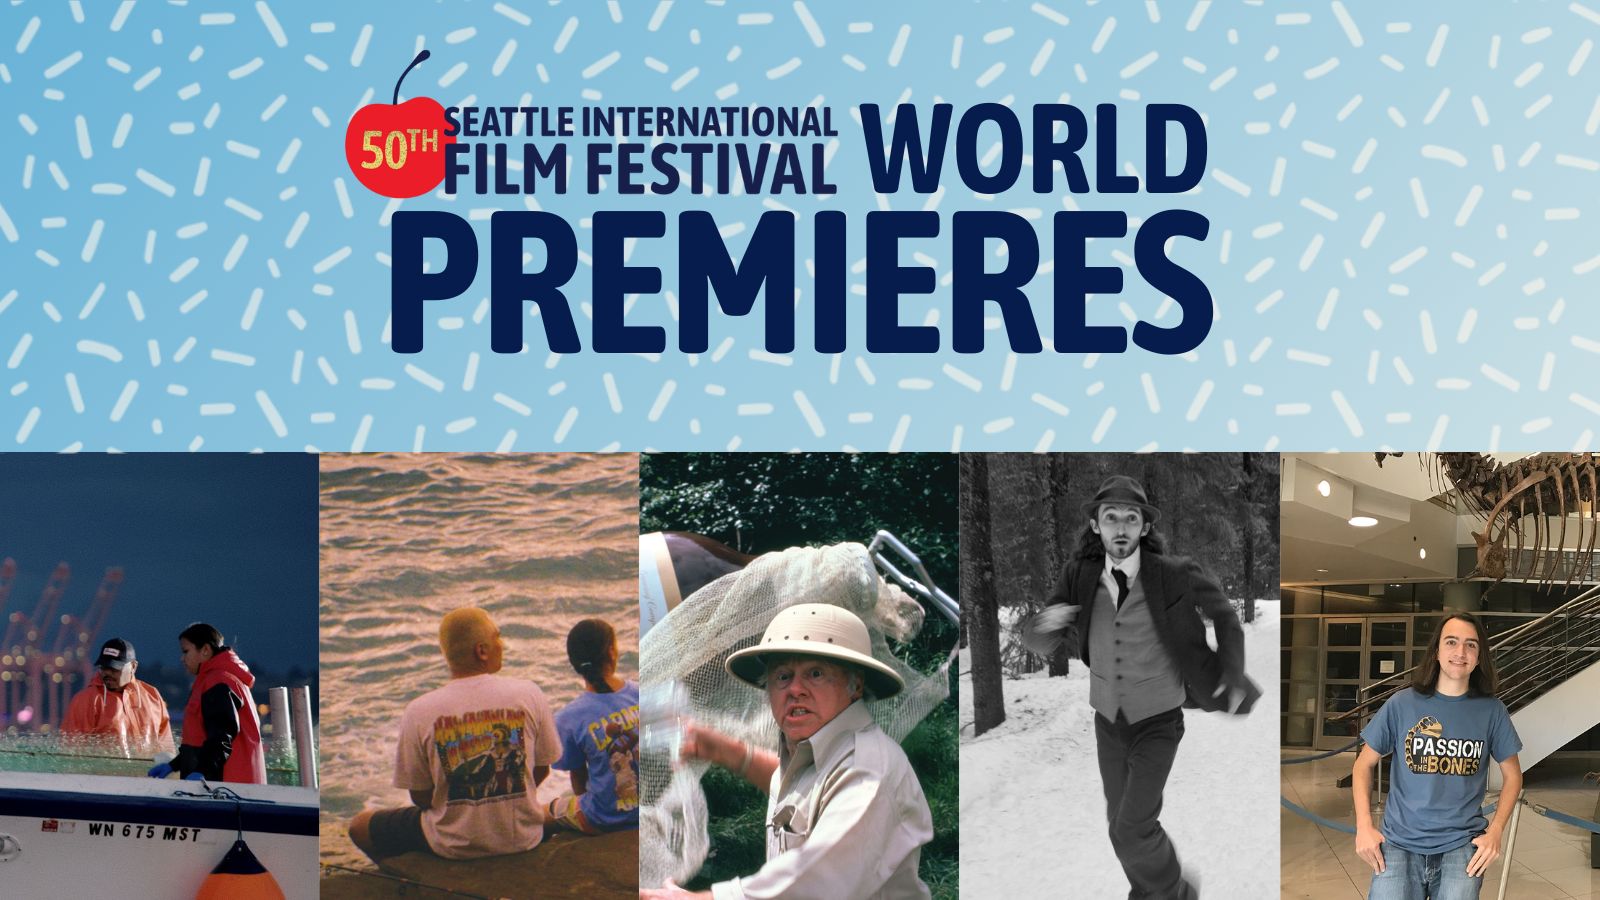 Seattle International Film Festival World Premieres